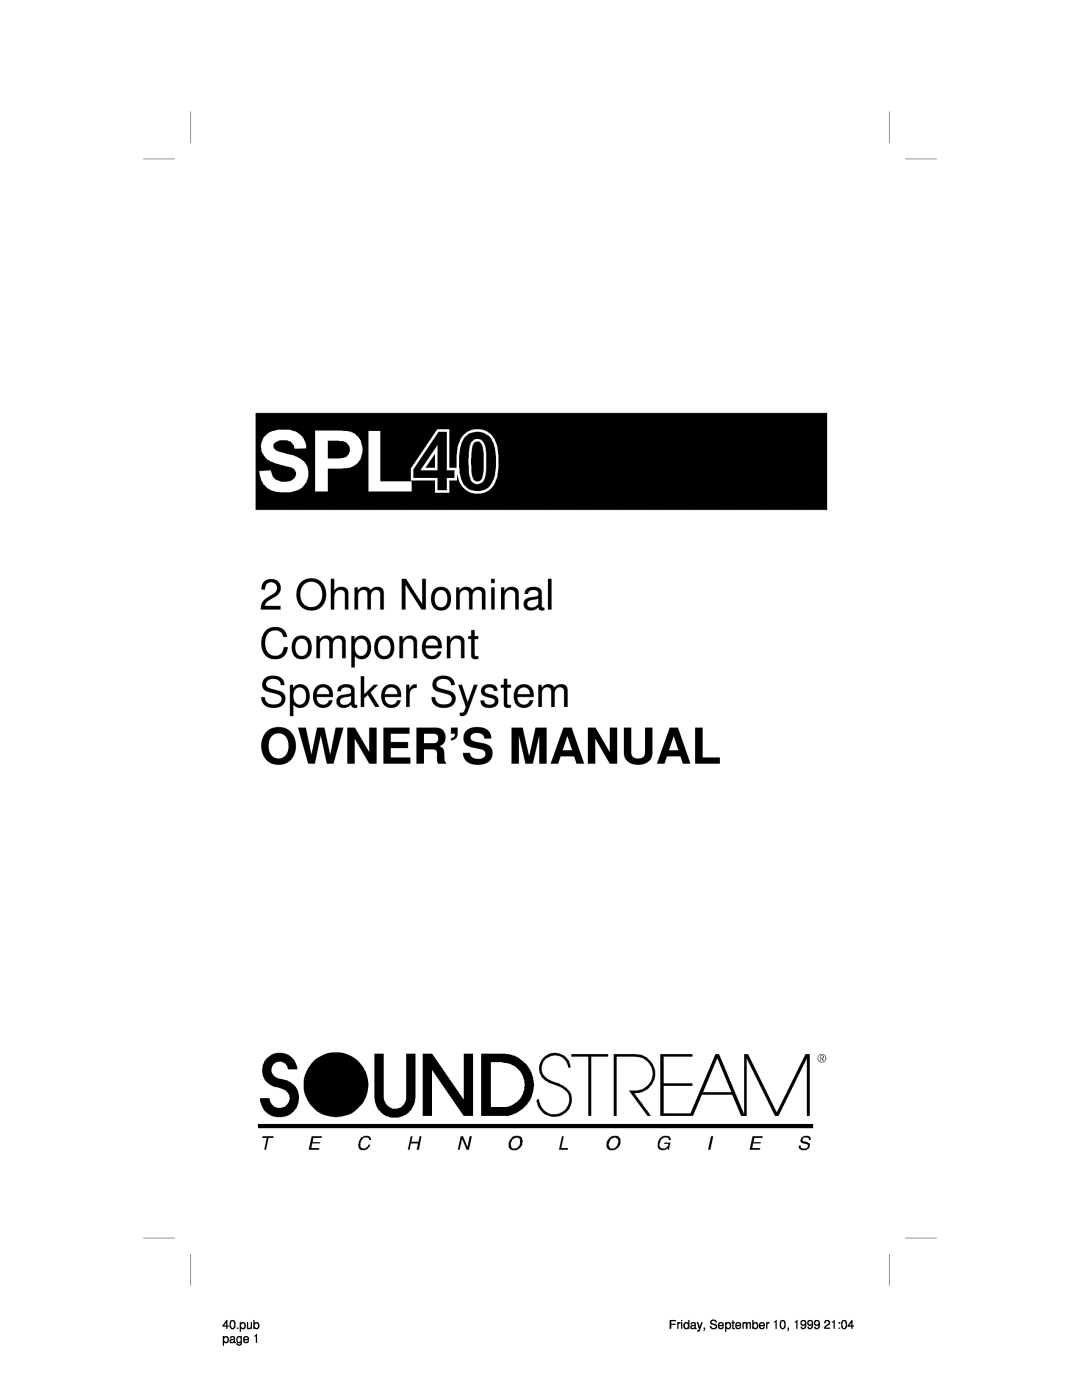 Soundstream Technologies SPL40 owner manual Ohm Nominal Component Speaker System, 40.pub, page, Friday, September 